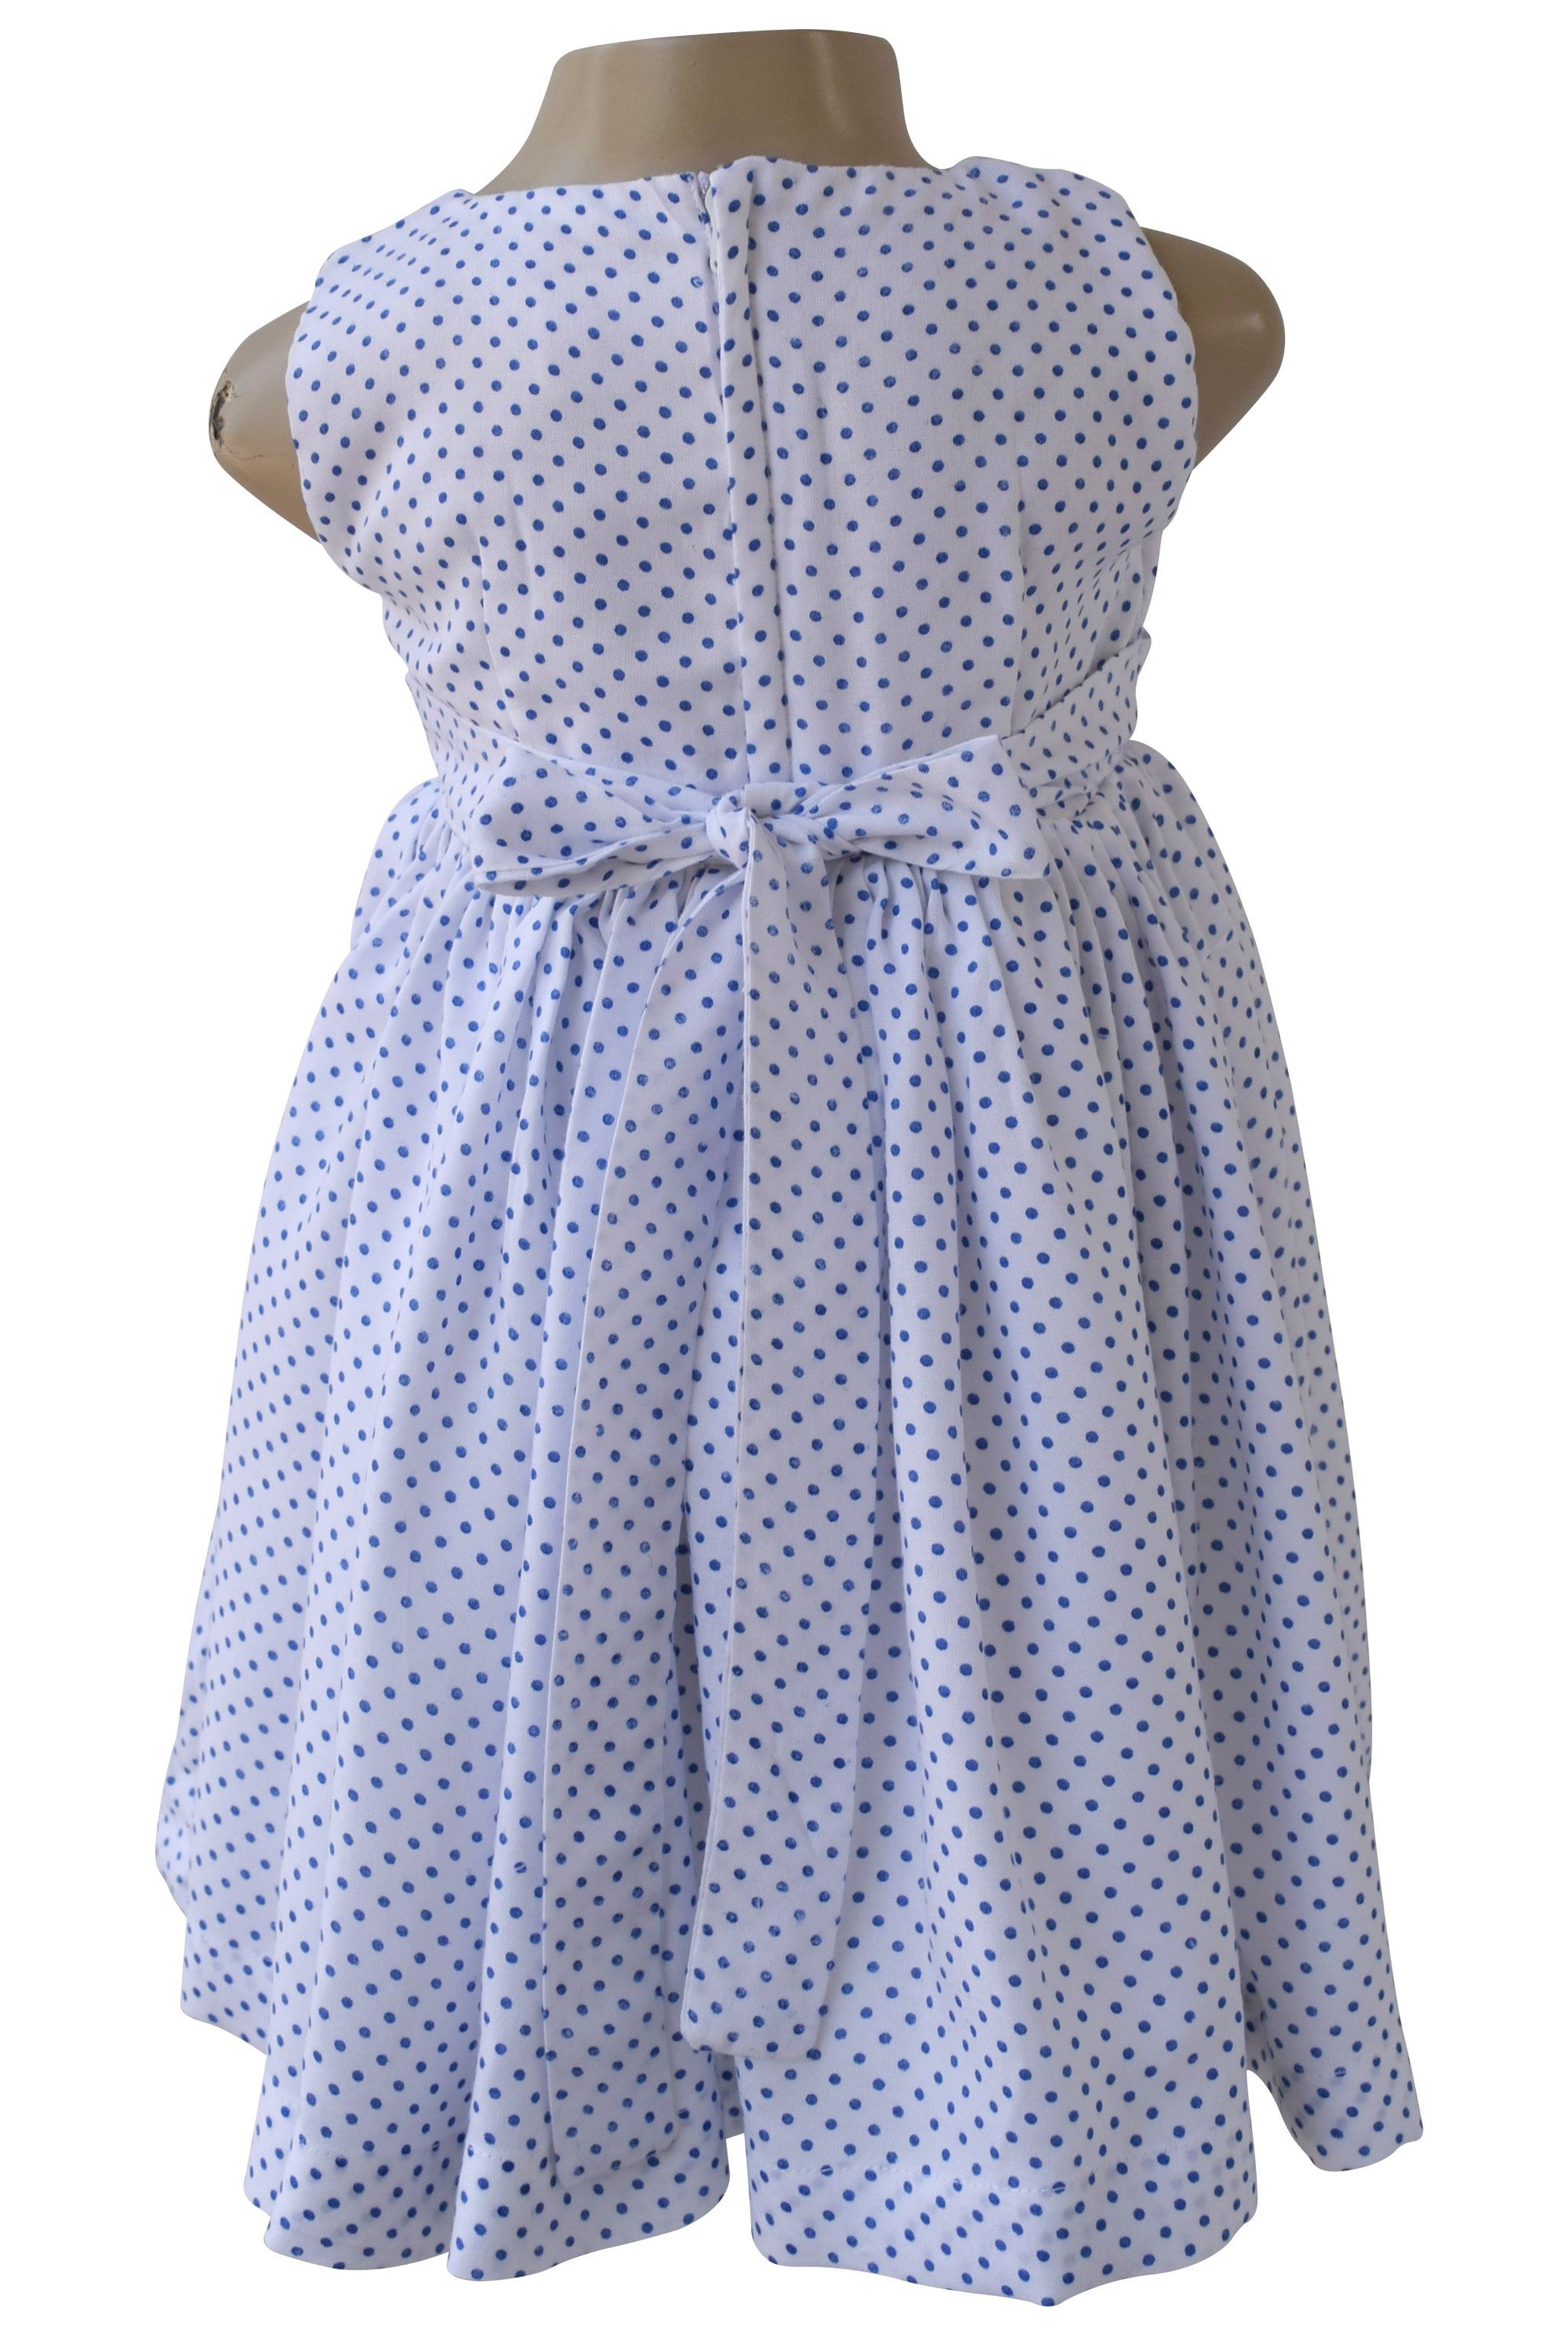 Faye Blue Polka Dress for girls